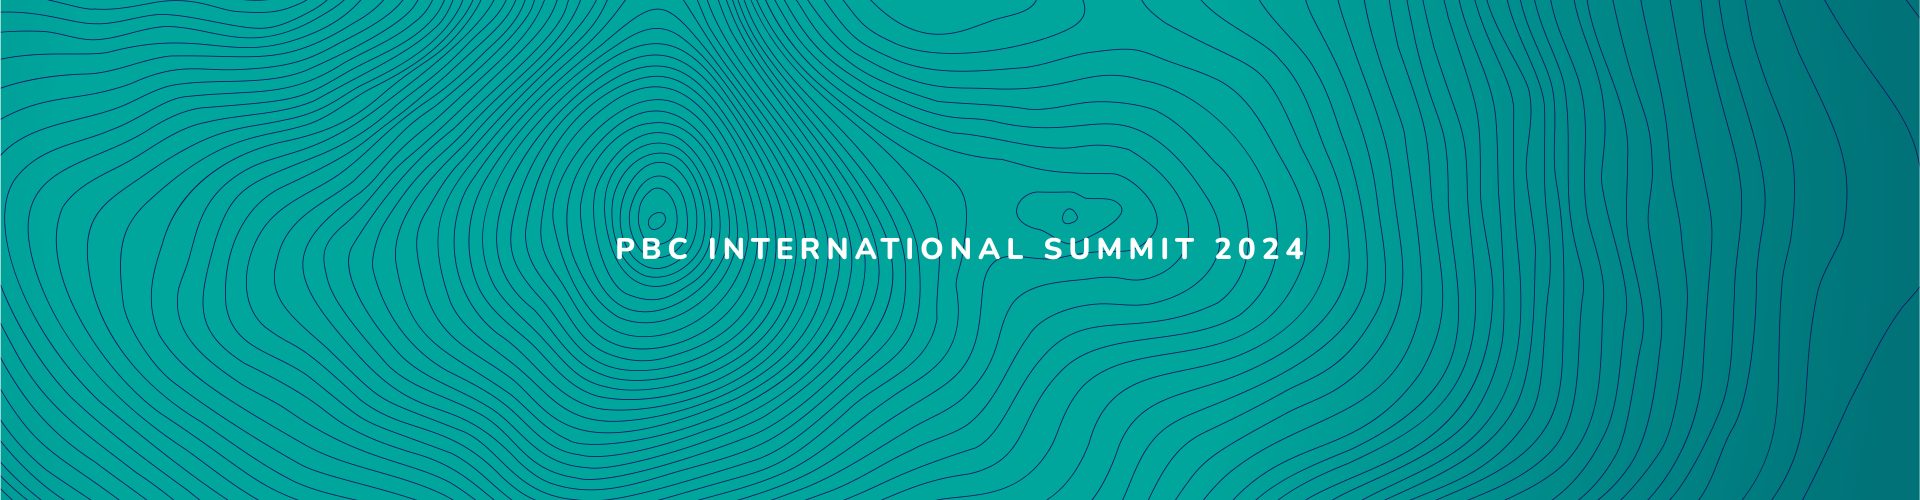 International PBC summit 2024